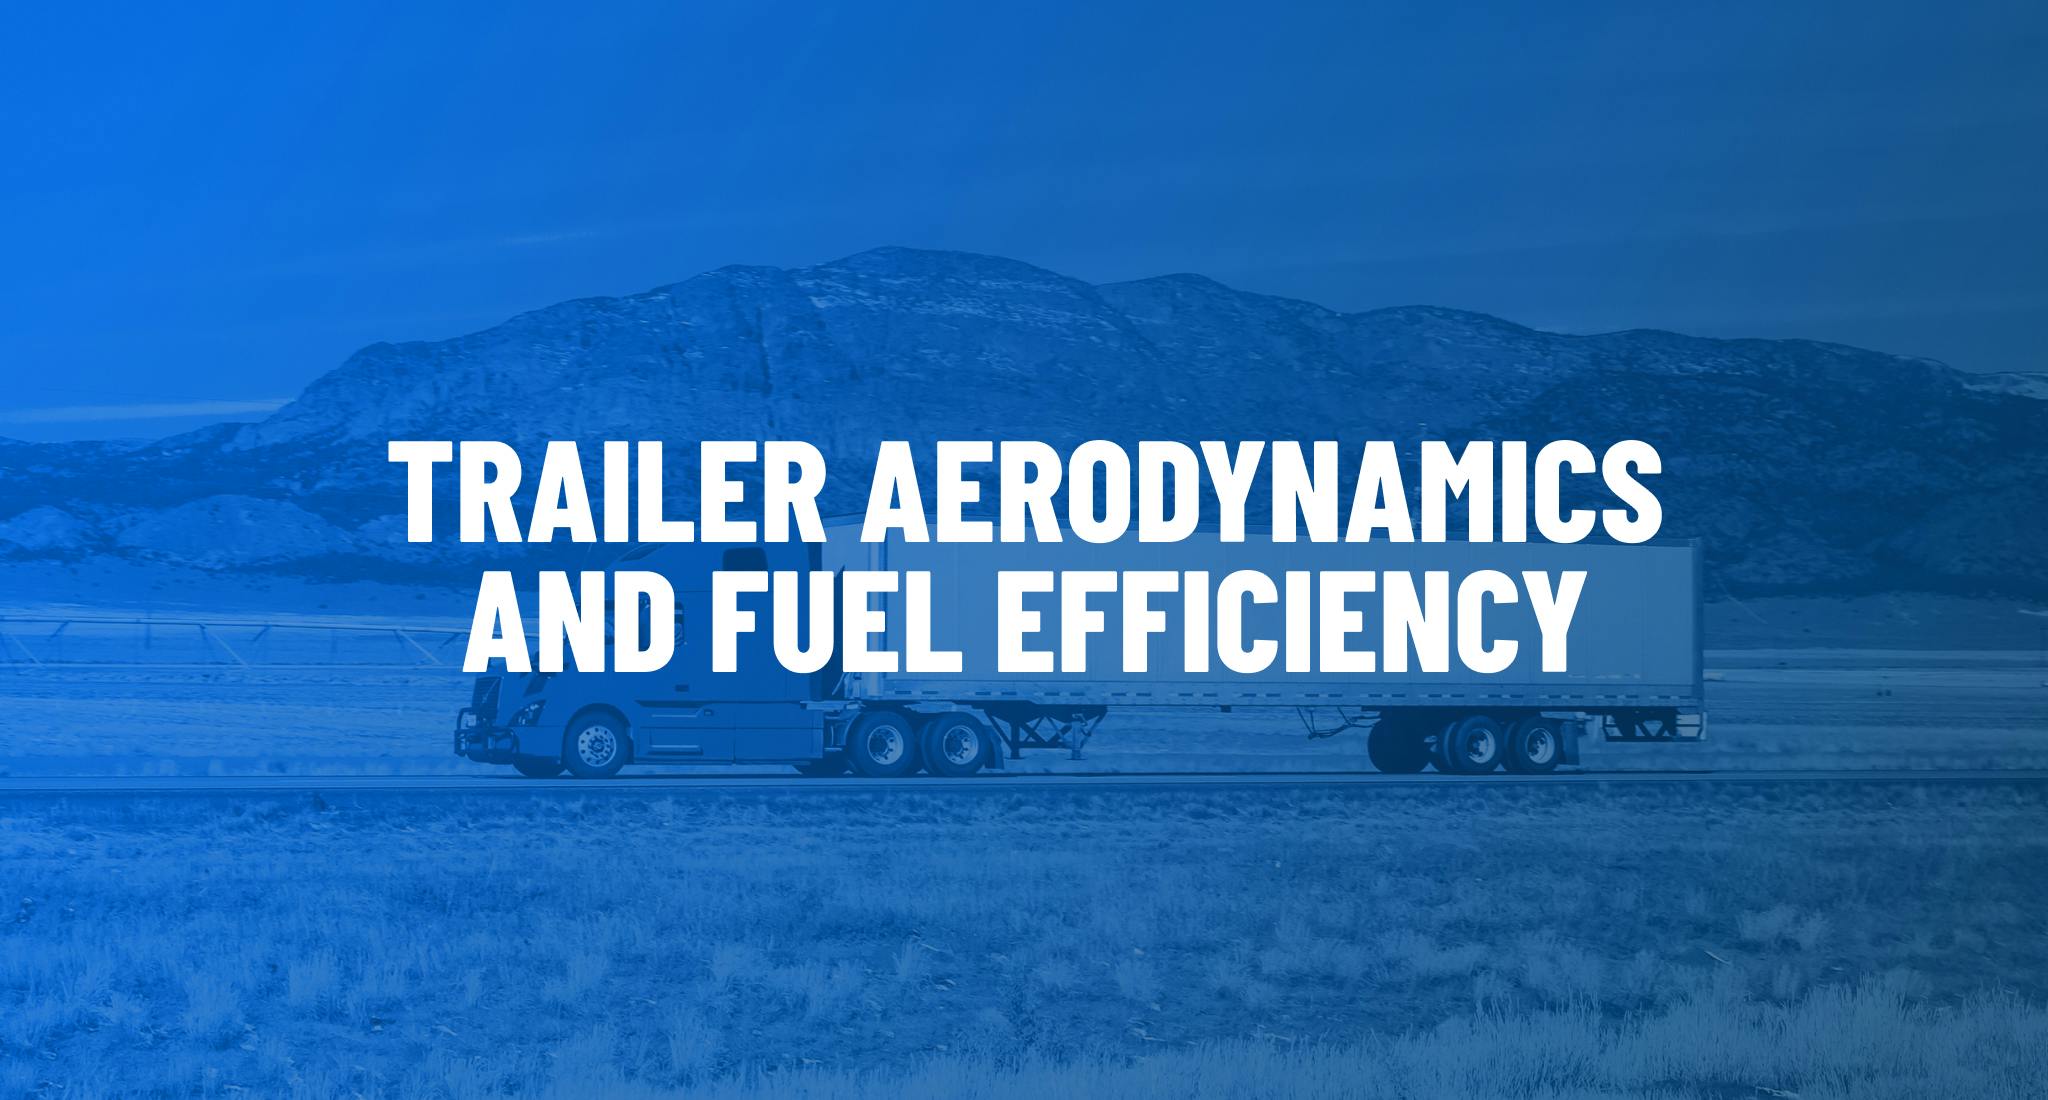 Trailer aerodynamics and fuel efficiency. 